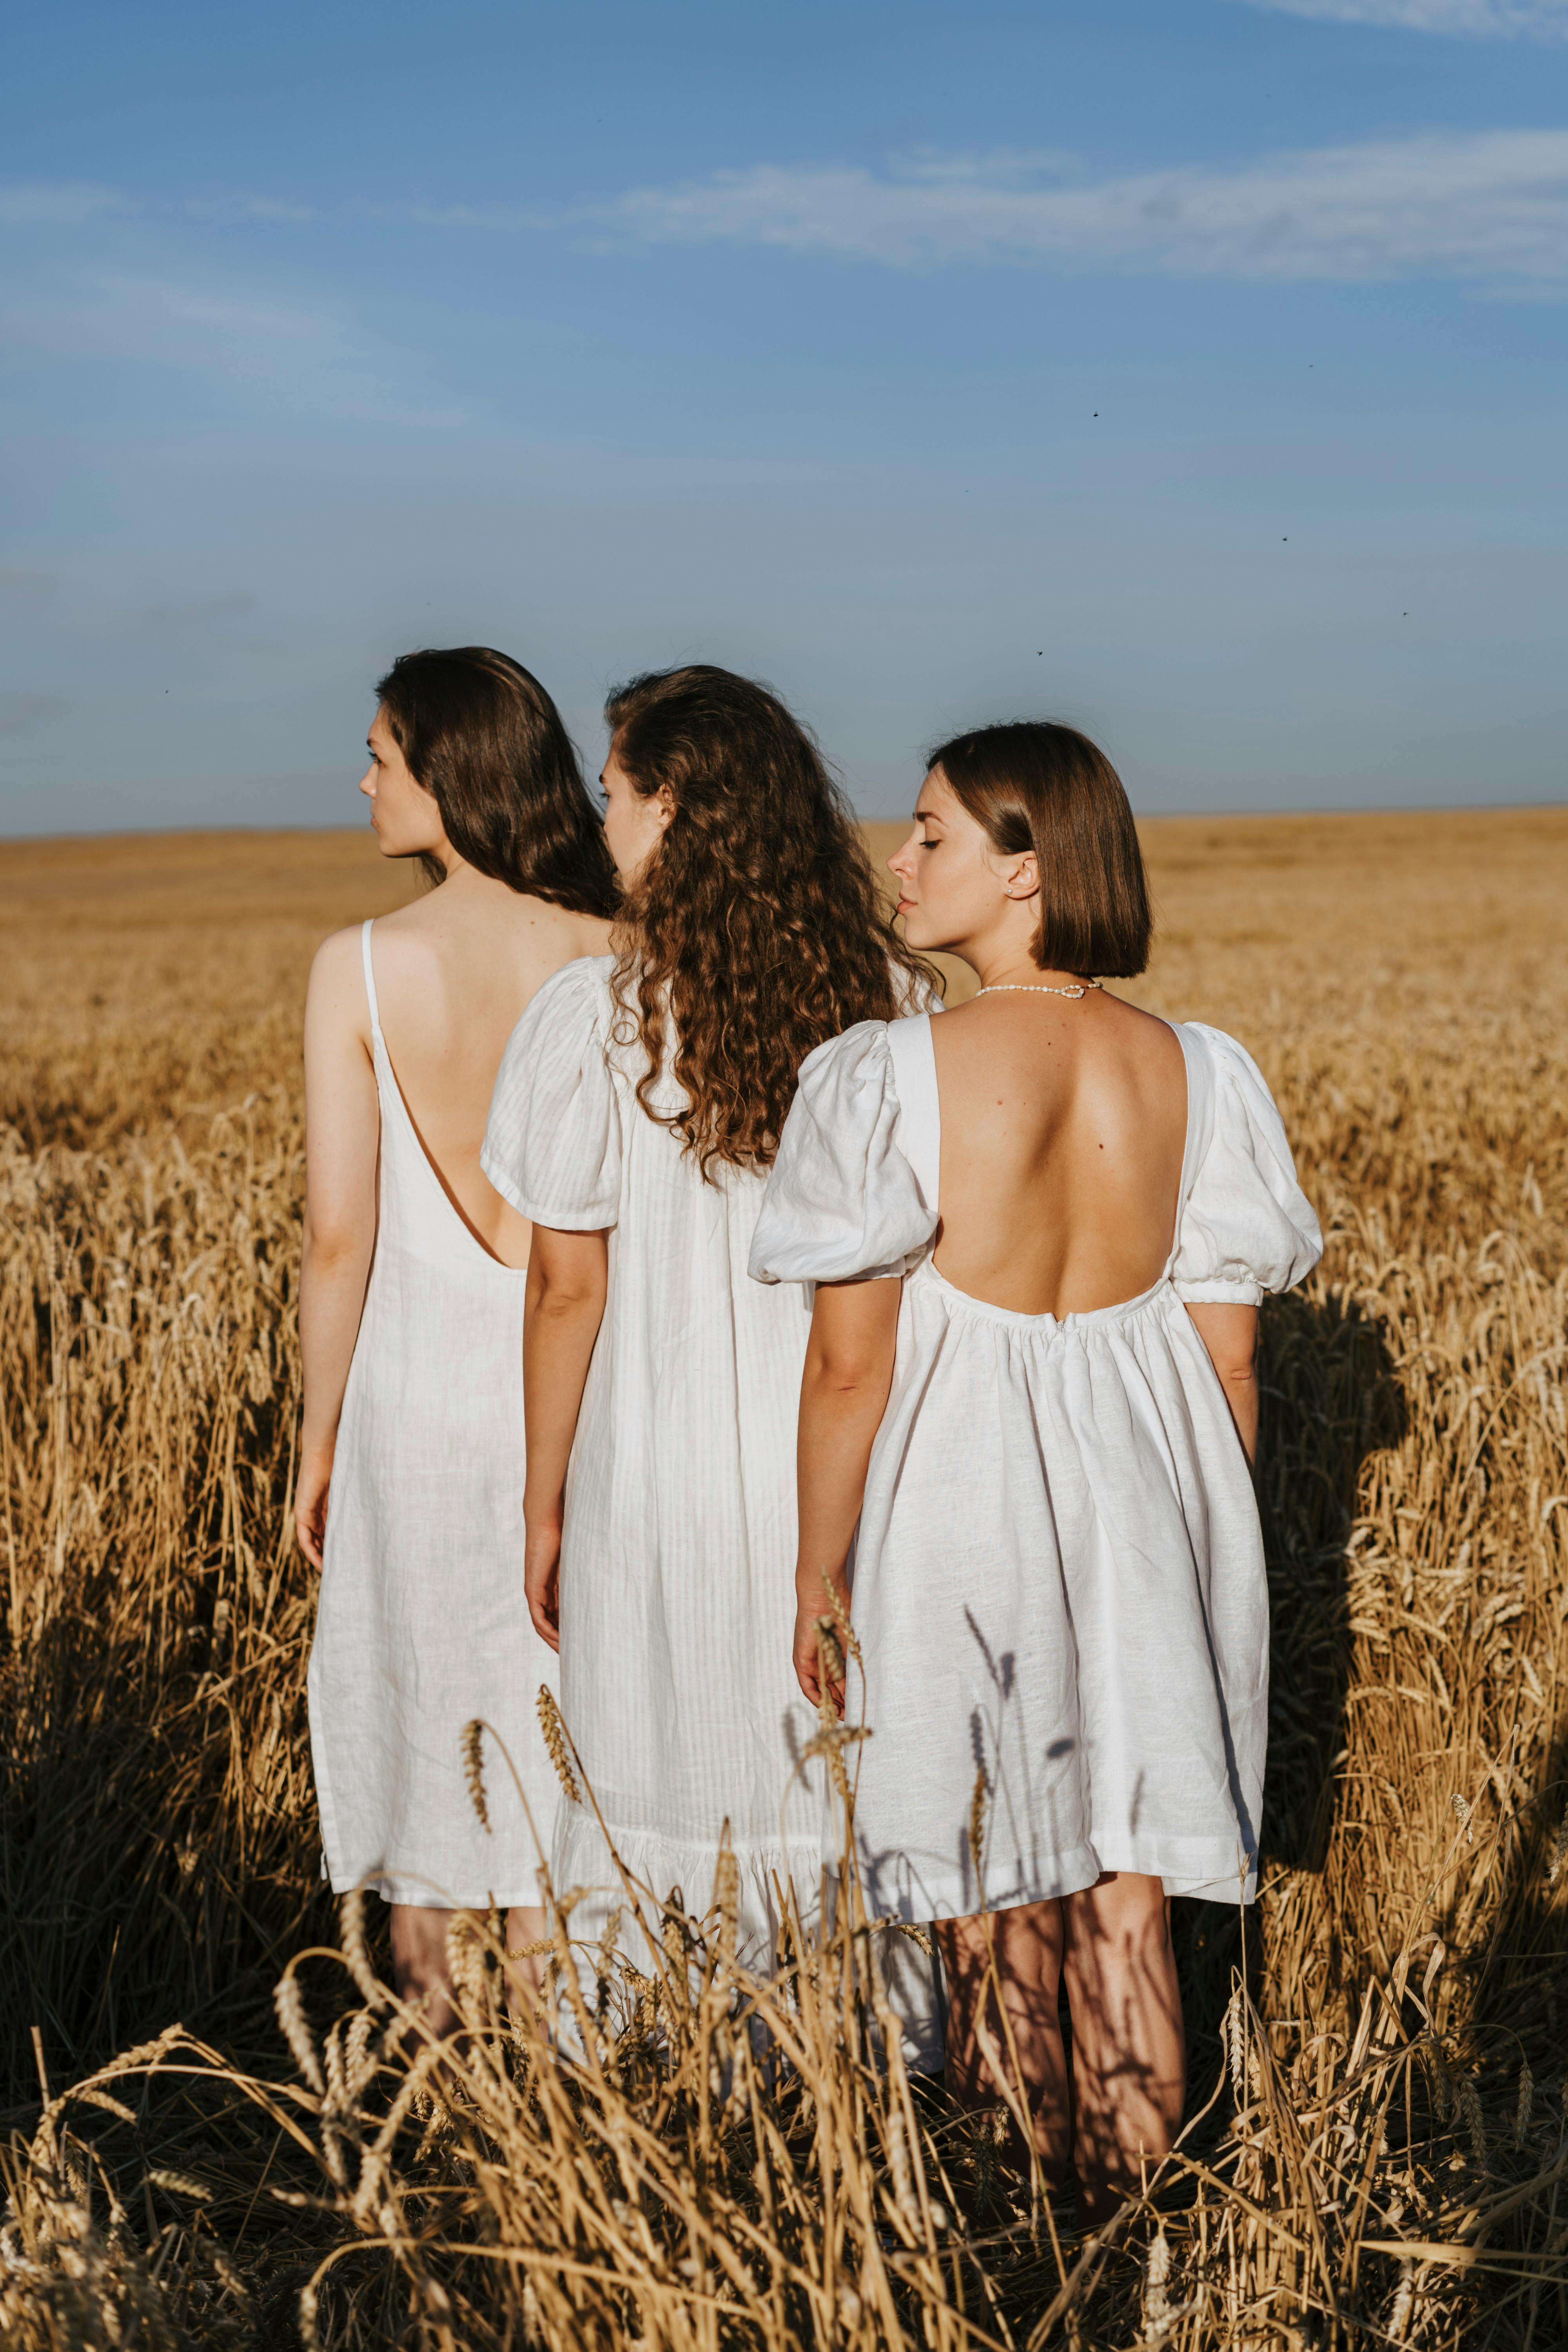 three women standing in crop field under blue sky